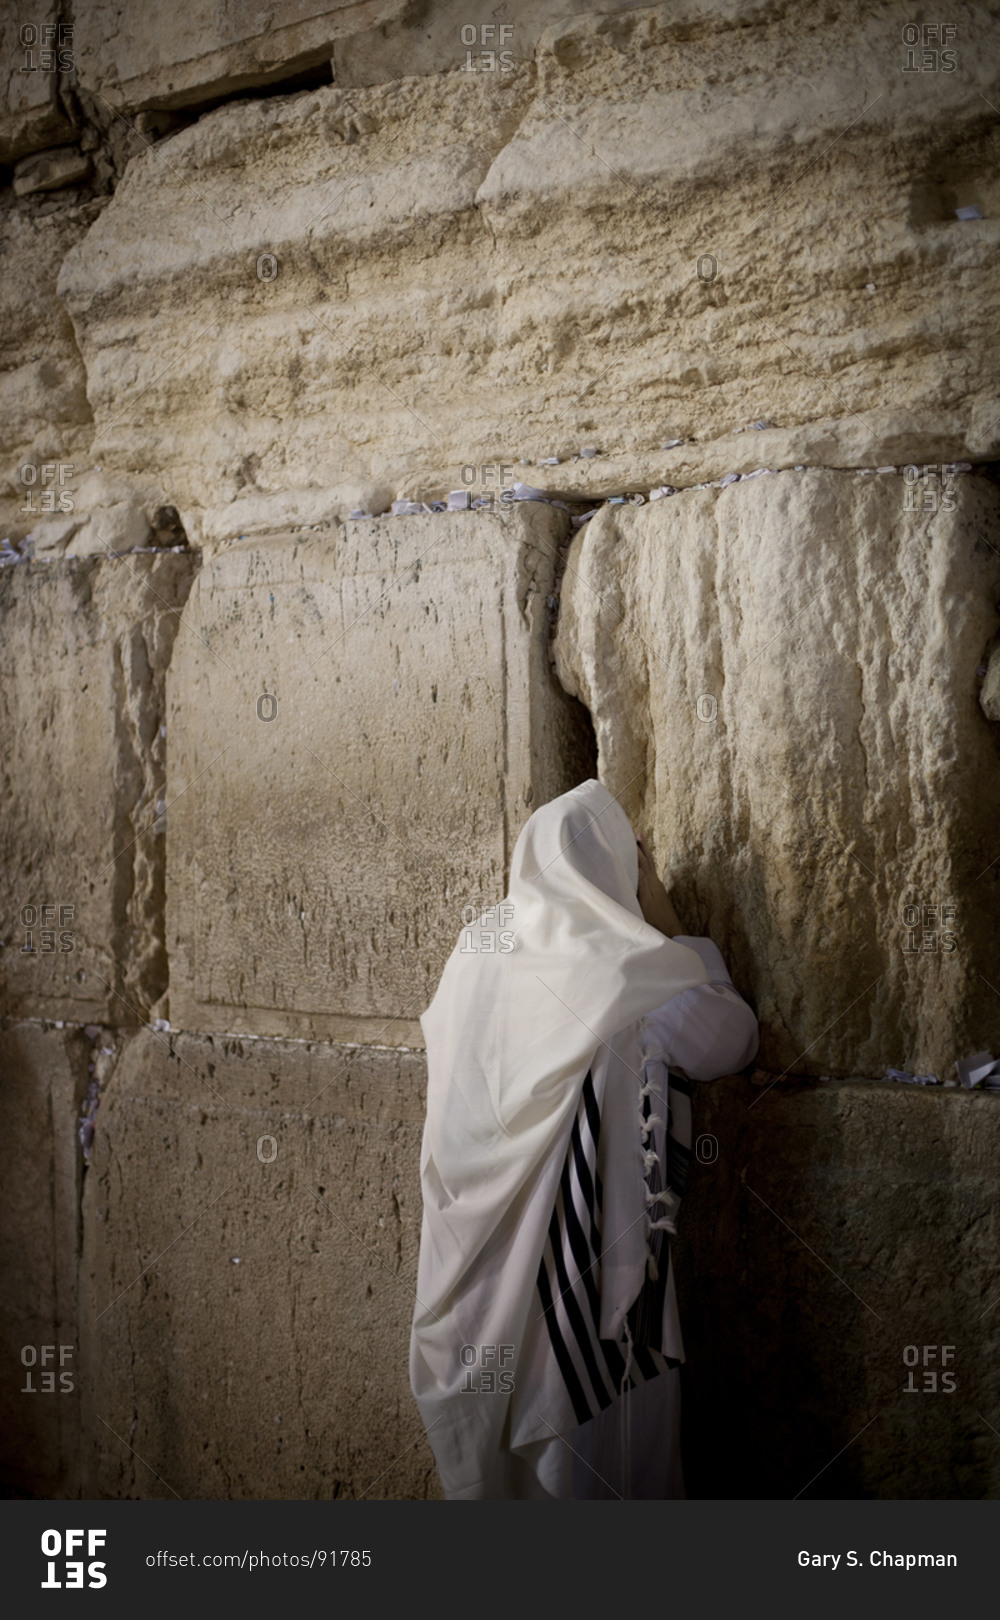 Man praying at the Western Wall, Jerusalem